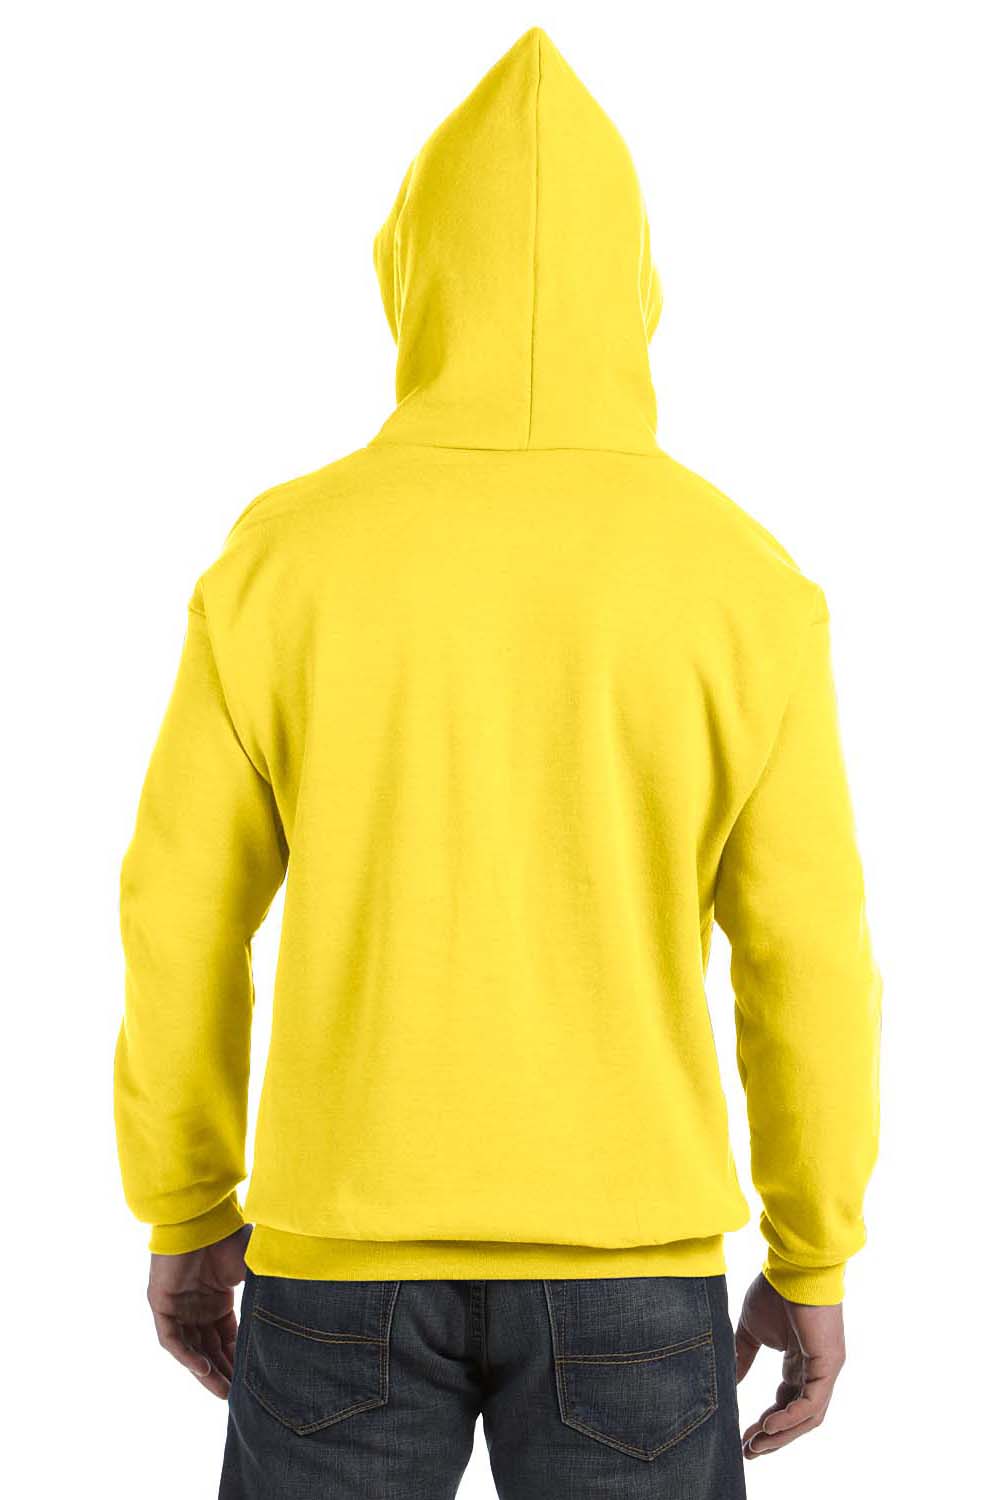 Hanes P170 Mens EcoSmart Print Pro XP Hooded Sweatshirt Hoodie Yellow Back